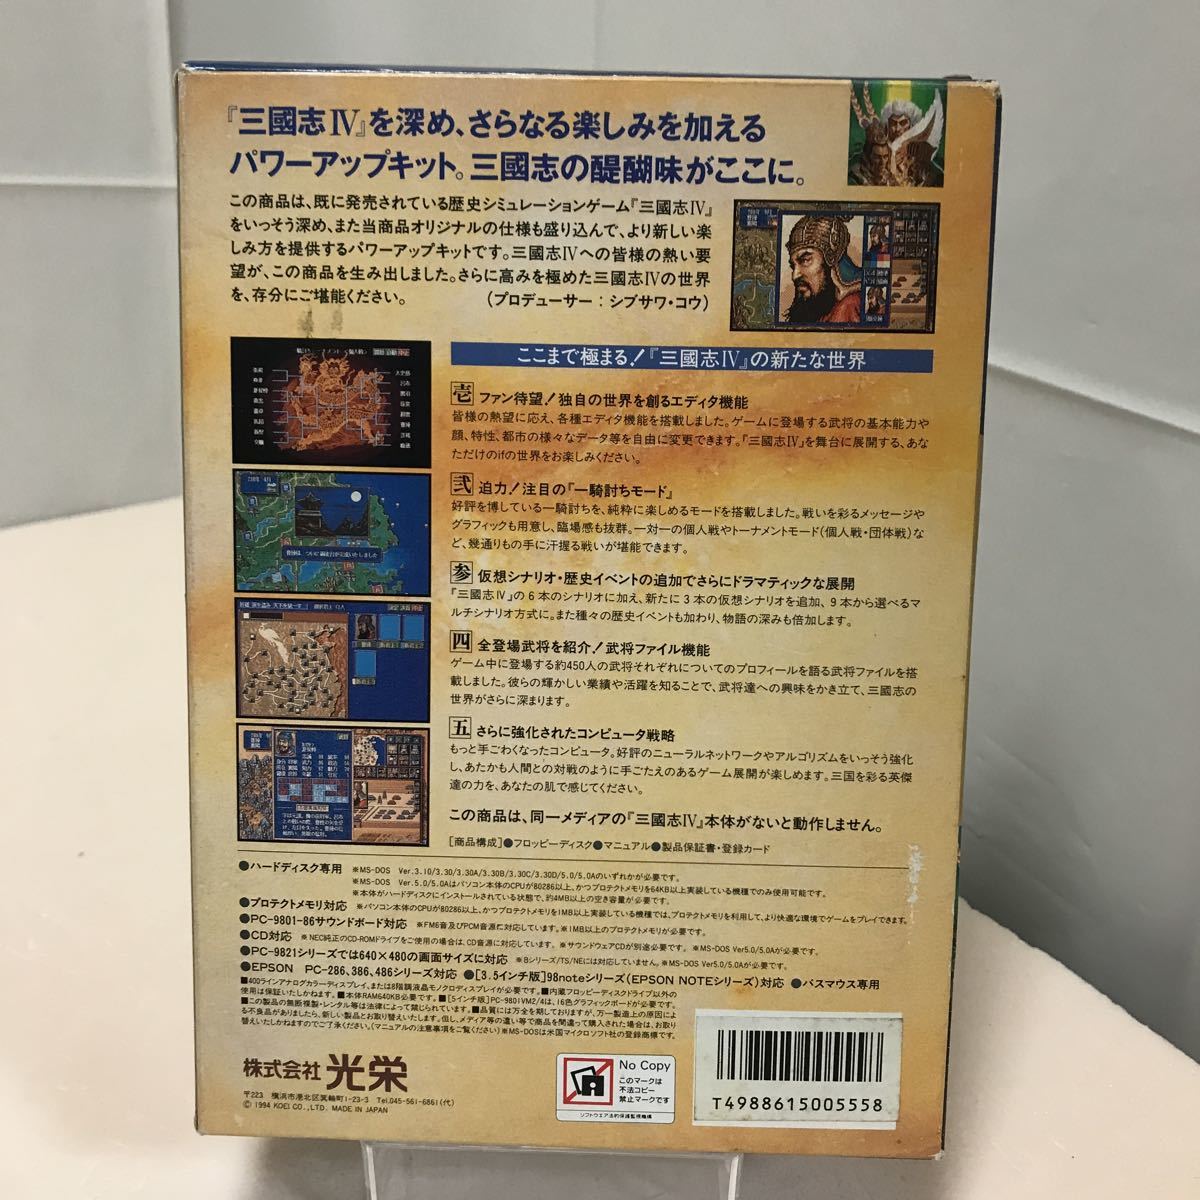 62%OFF!】 三國志Ⅳ 4 パワーアップキット PC98 5”2HD ゲームソフト www.idealmusicorp.com